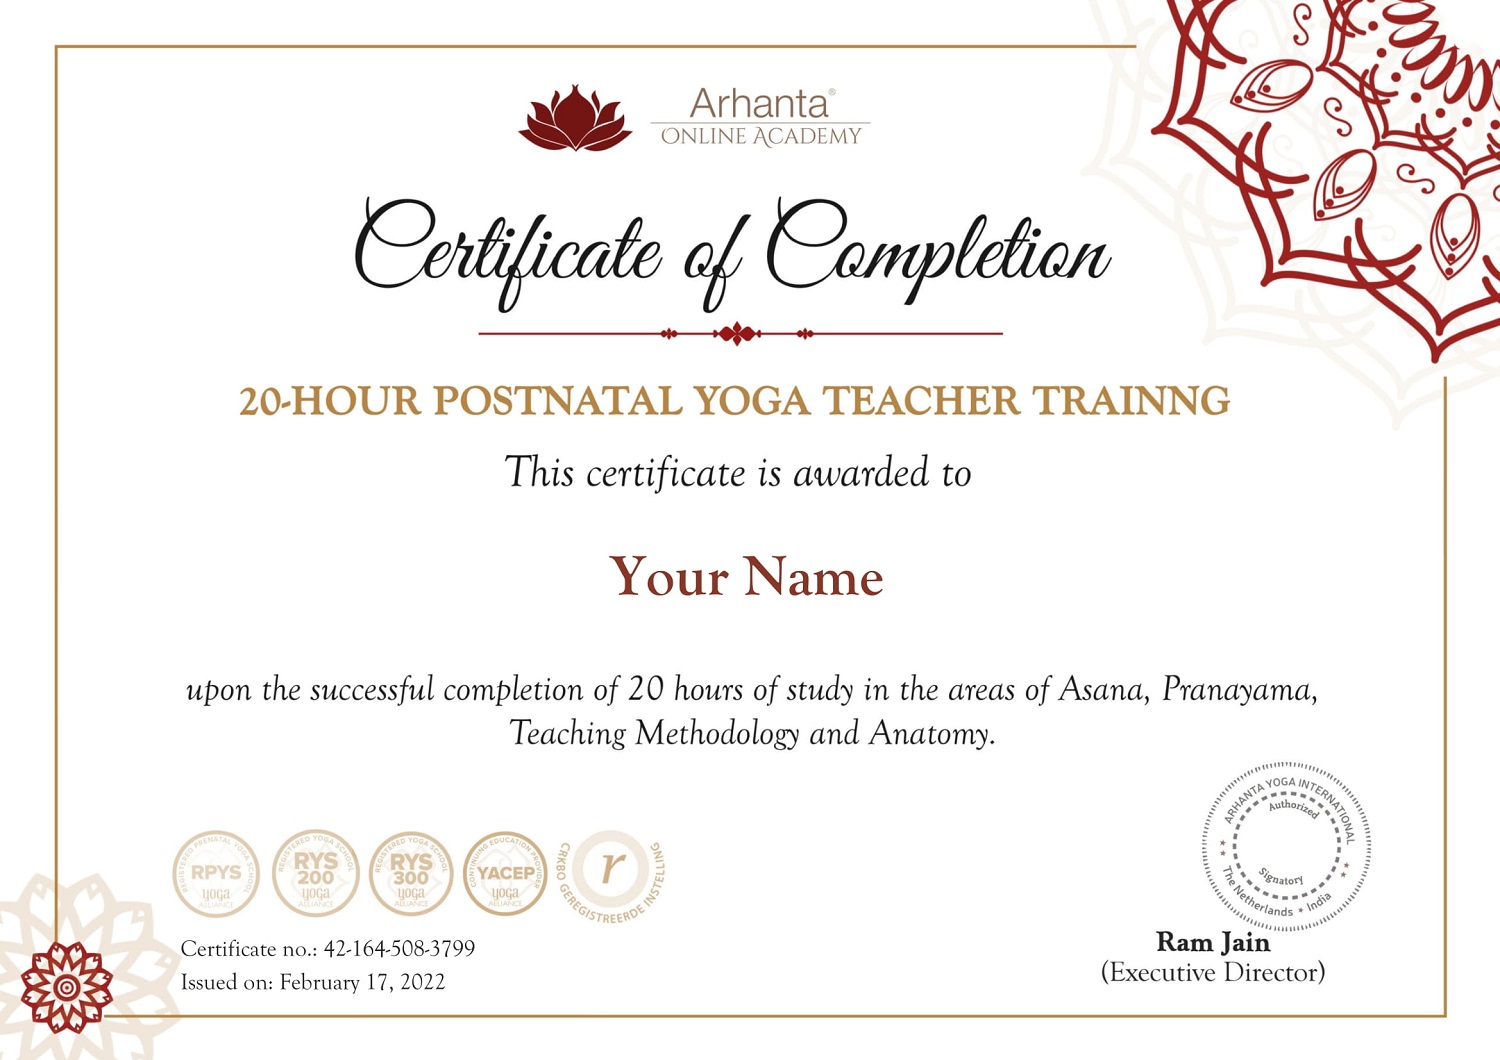 Certificat de formation de professeur de yoga postnatal en ligne (20 heures)